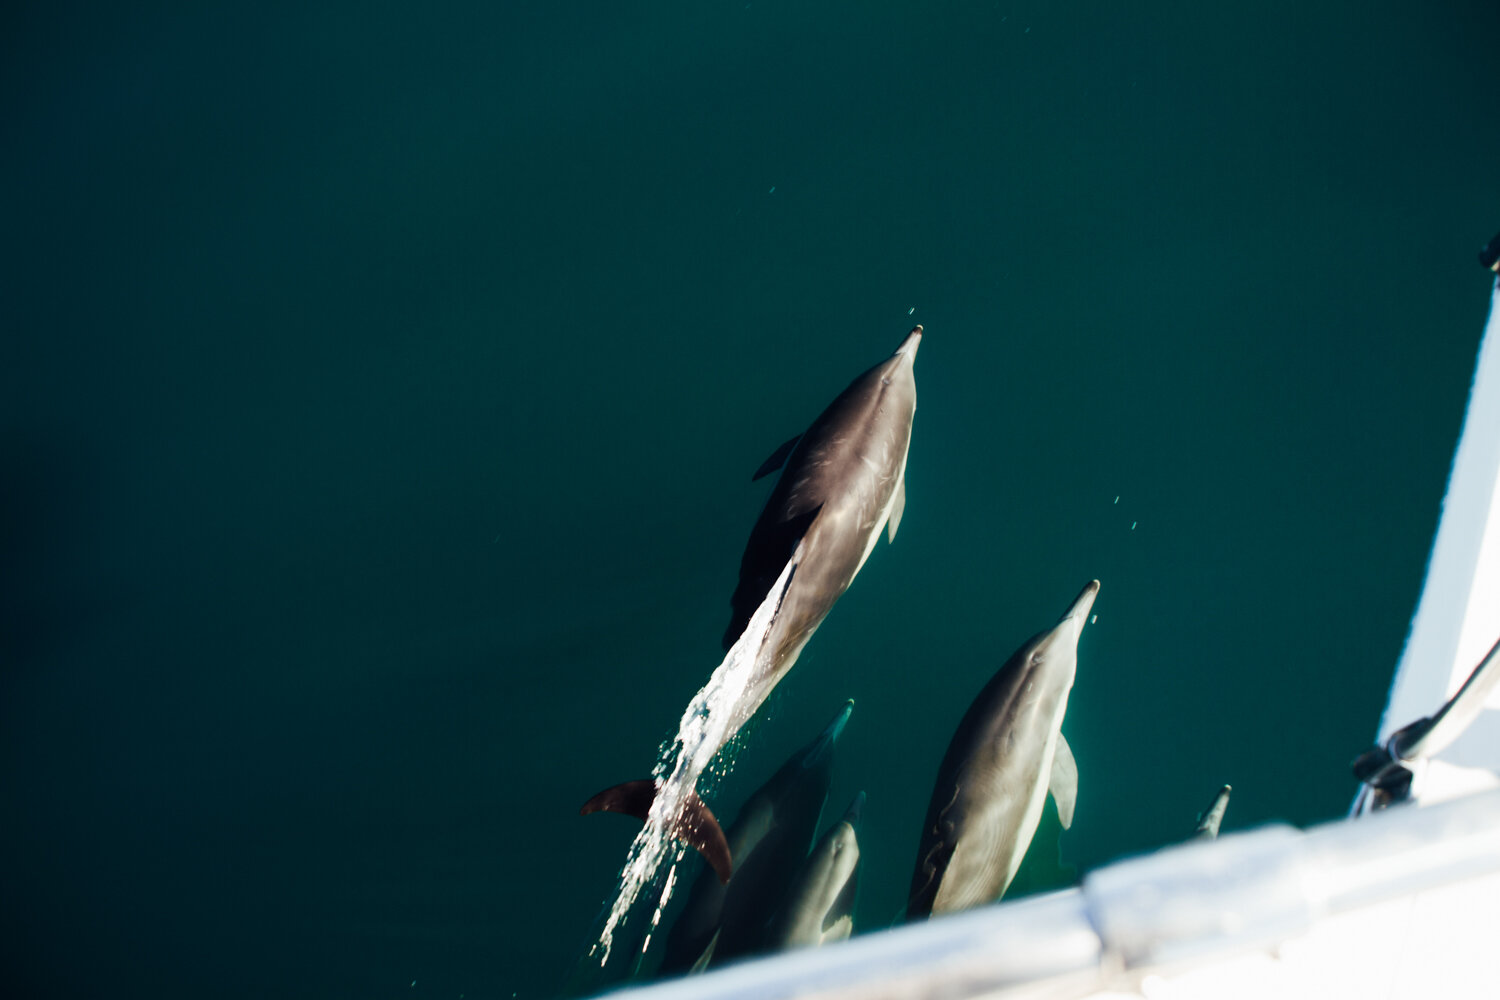 ocean defenders sea pacific krista espino volunteer nonprofit california photographer sealife dolphins dolphin boat organization21.jpg